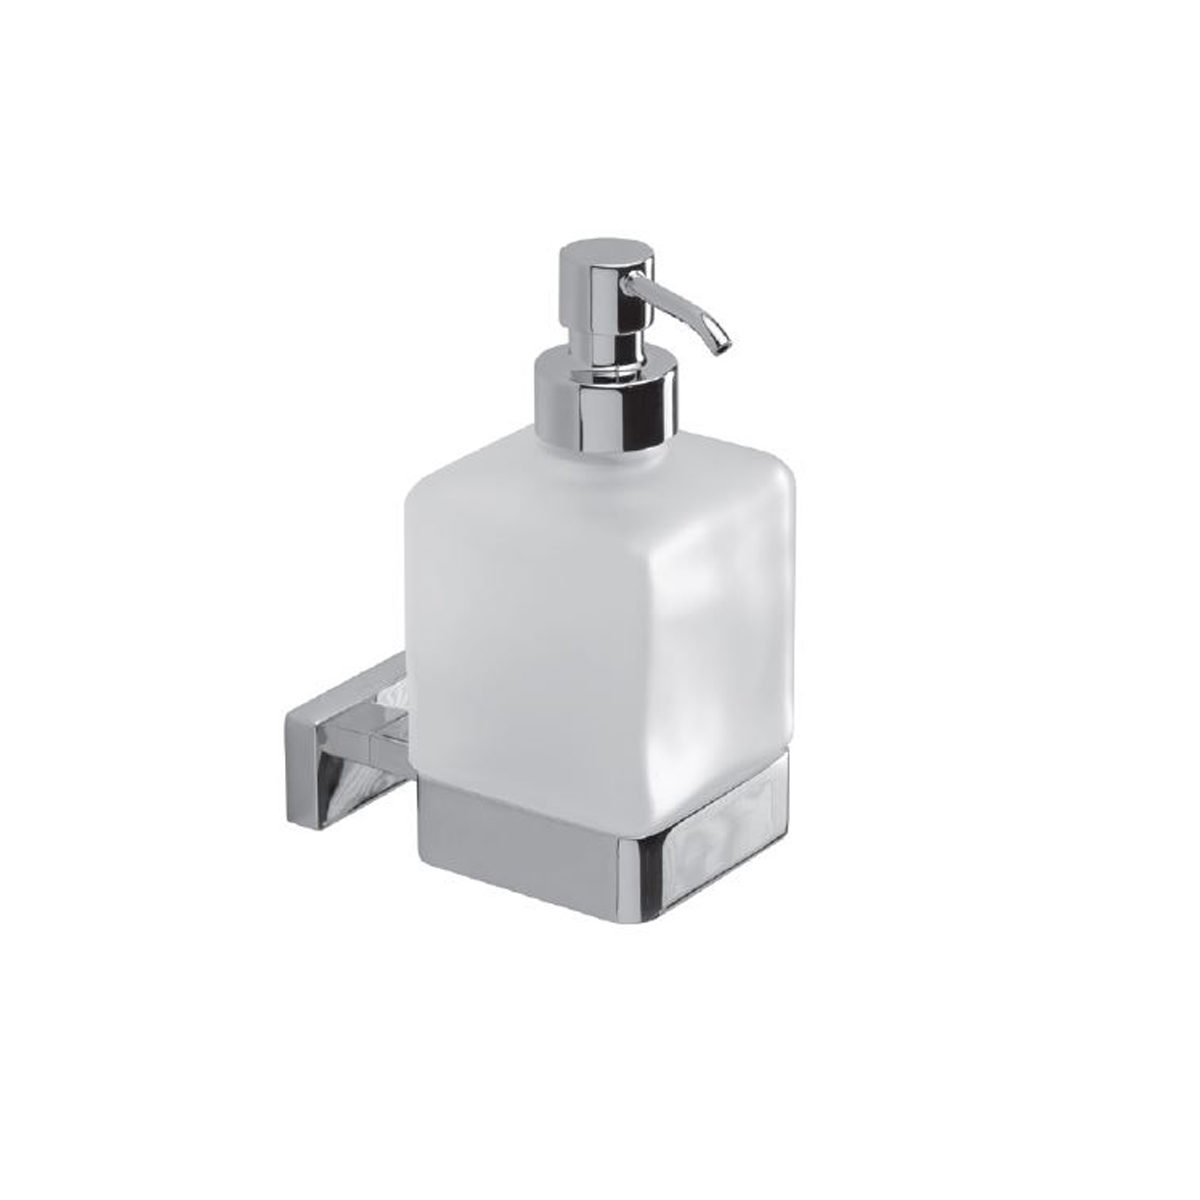 Wall mounted liquid soap dispenser - INDA